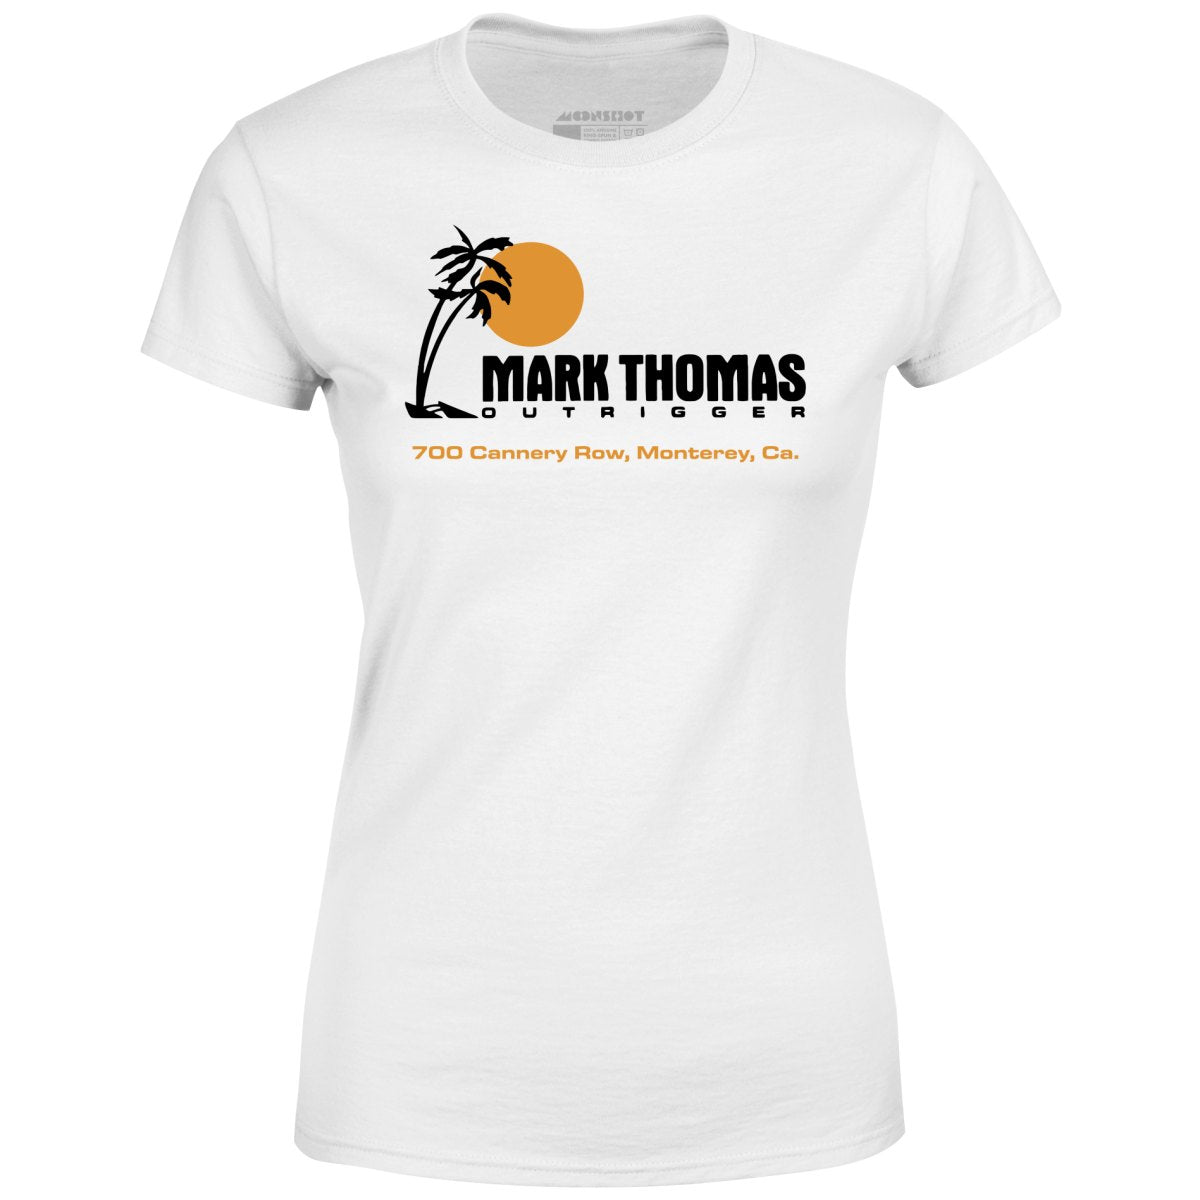 Mark Thomas Outrigger v2 - Monterey, CA - Vintage Tiki Bar - Women's T-Shirt